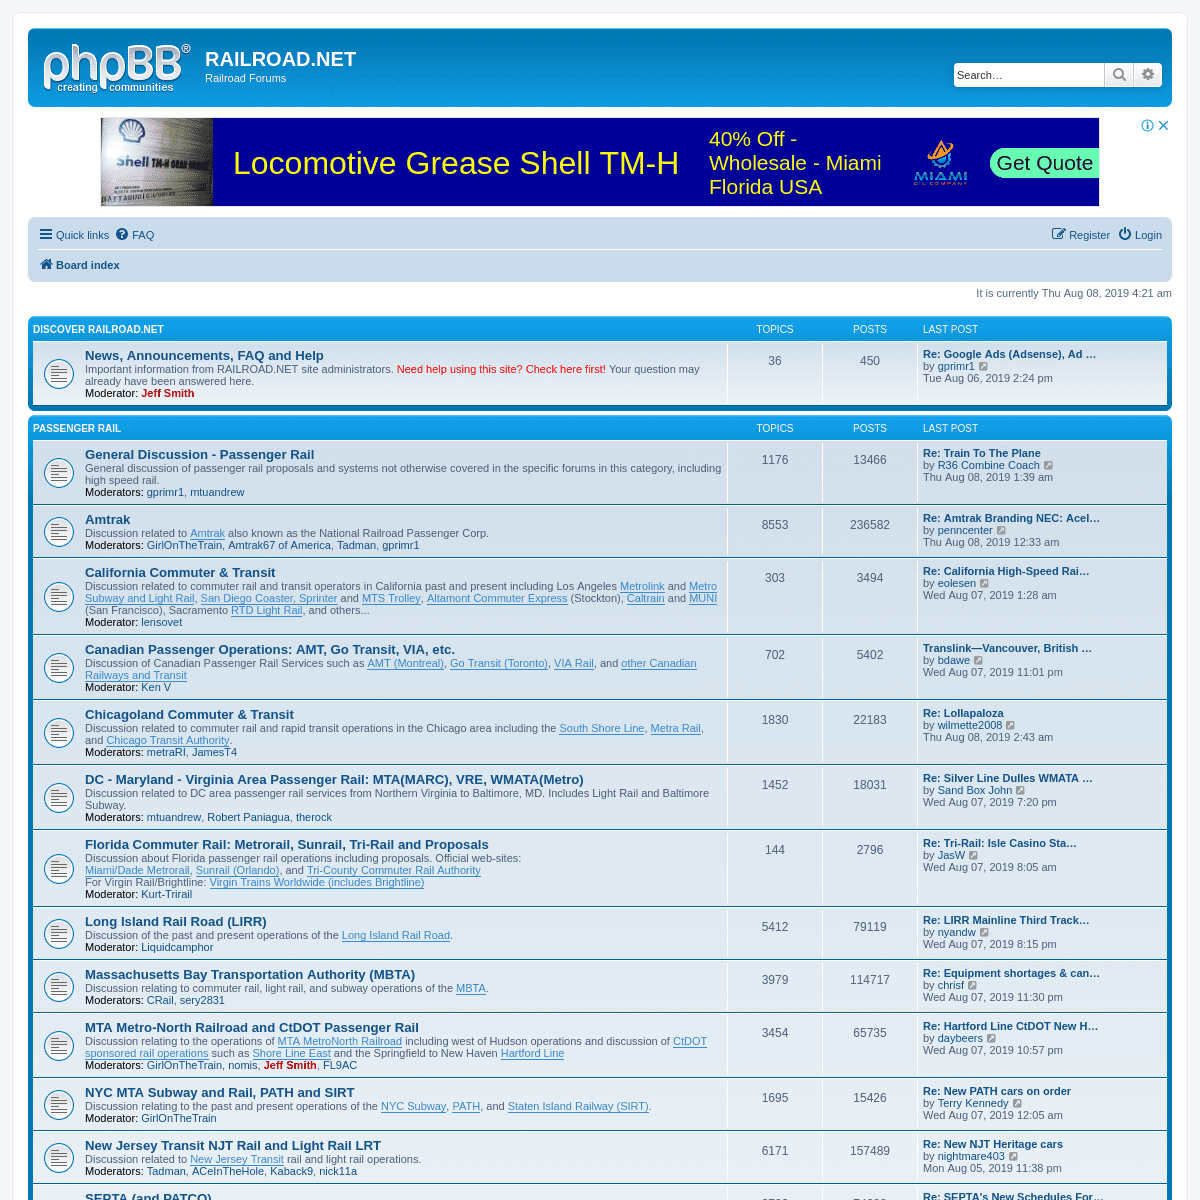 RAILROAD.NET - Index page